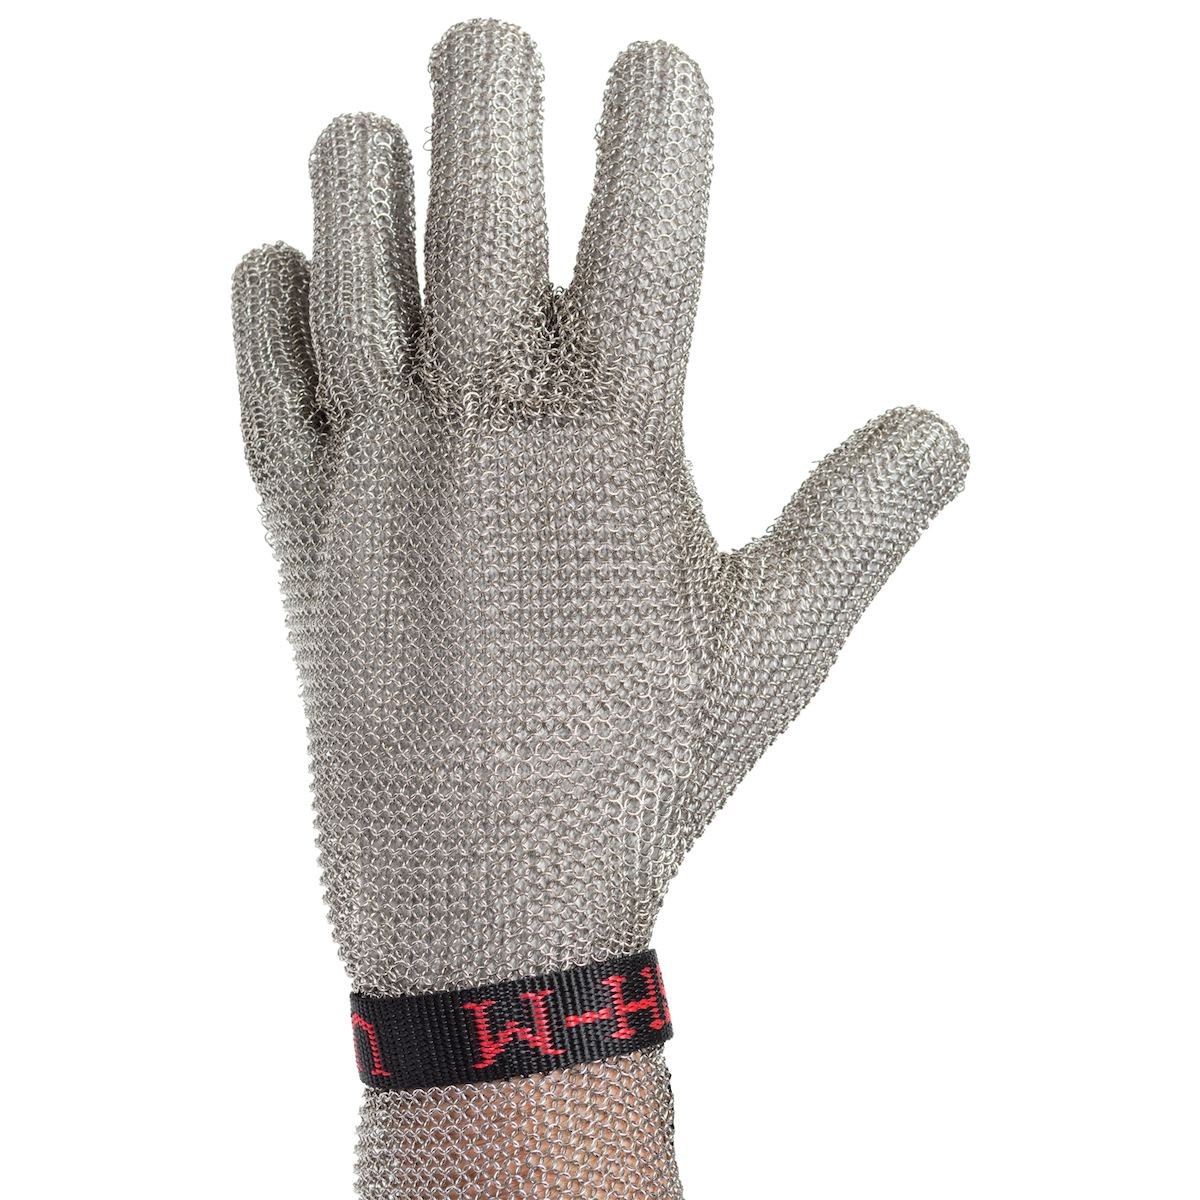 Whizard Stainless Steel Metal Mesh Cut Resistant Glove 2